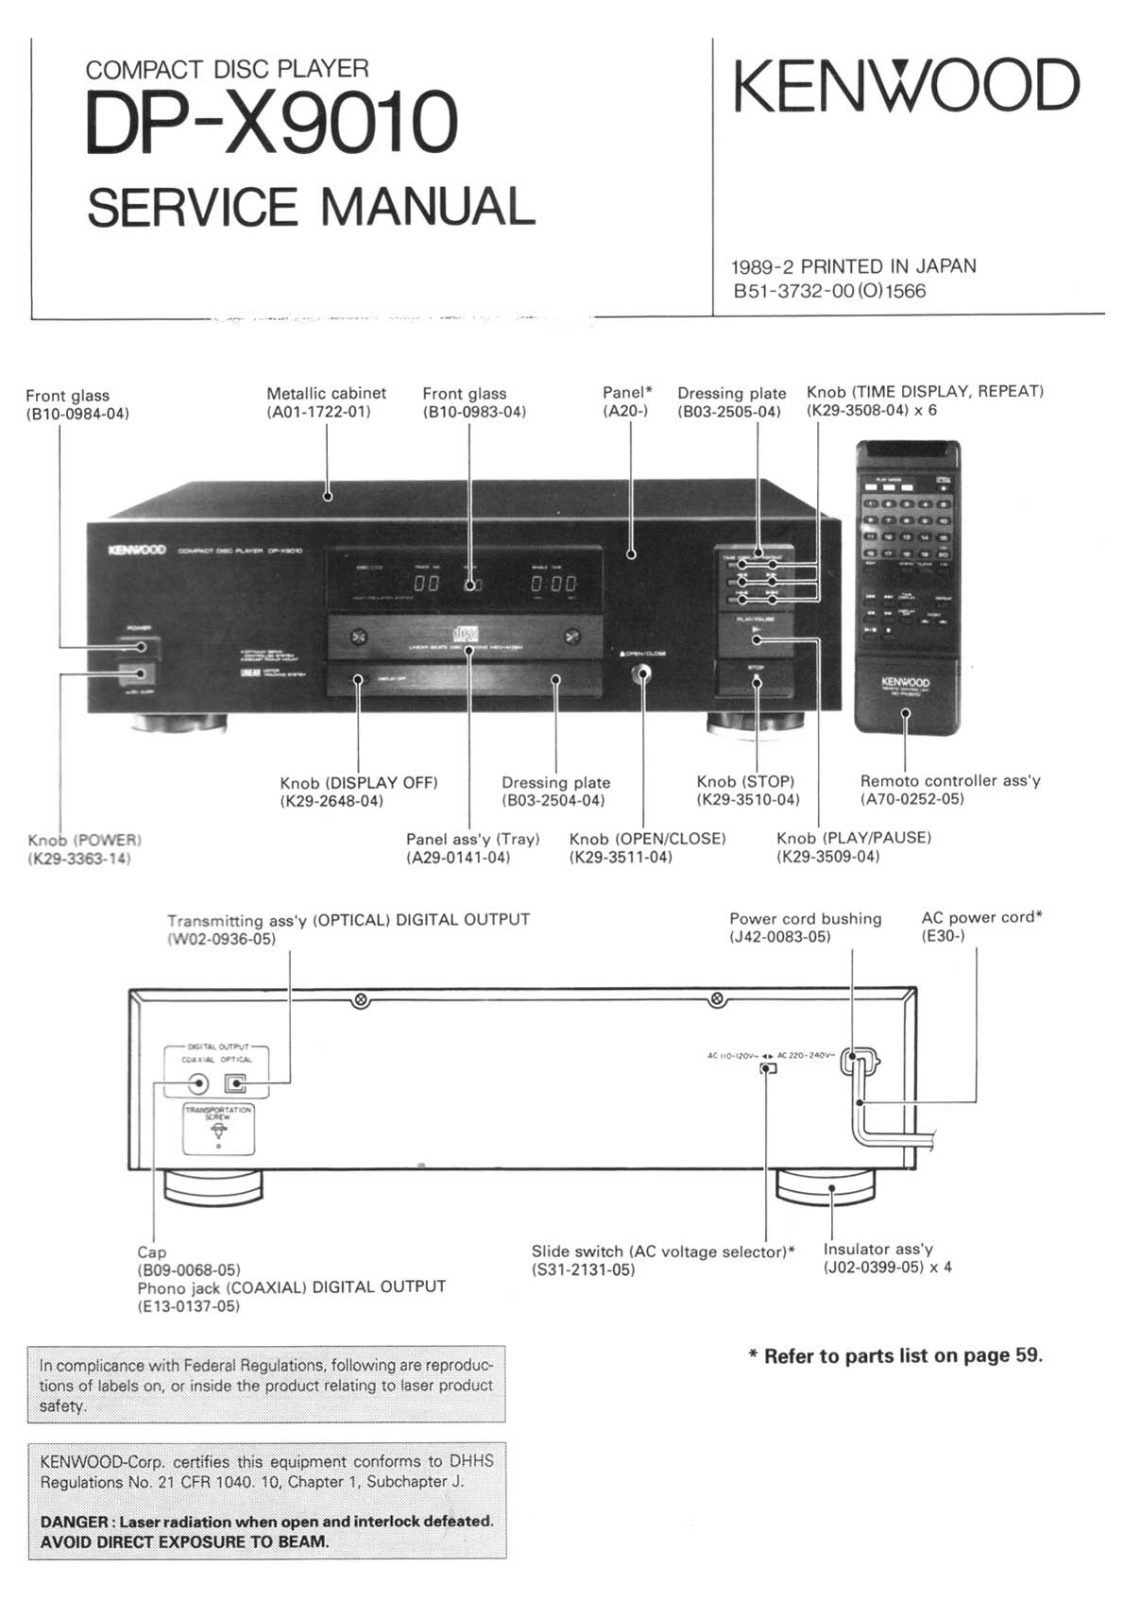 Kenwood DPX-9010 Service manual